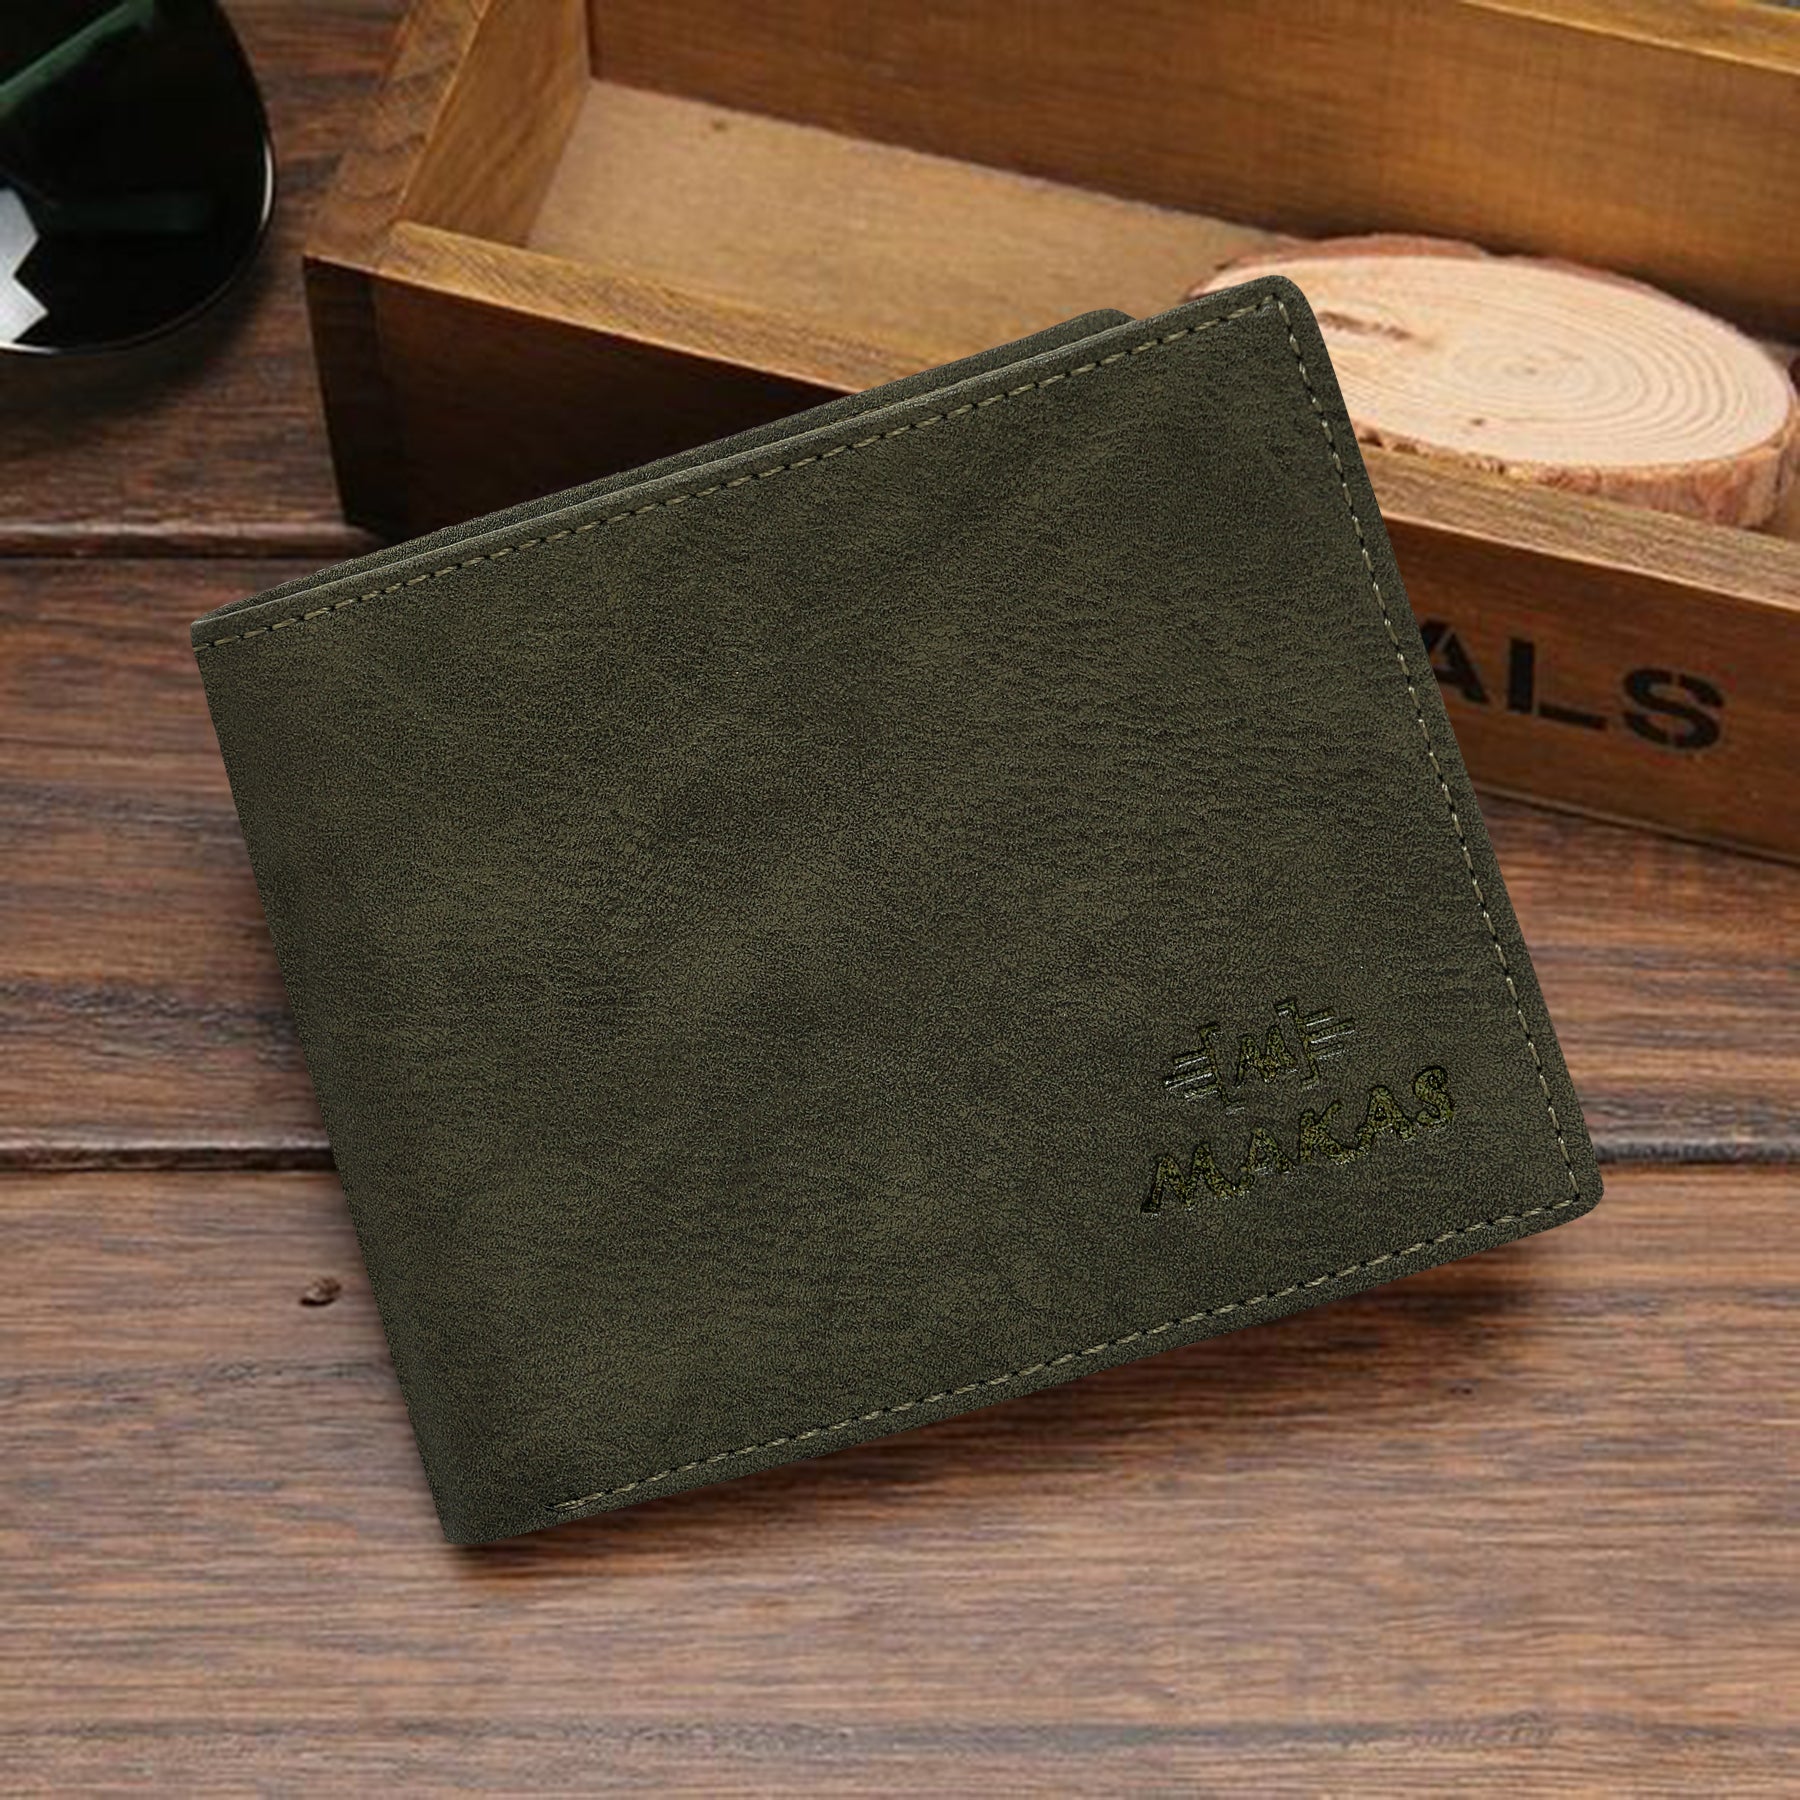 Makas Men's Card Holder Wallet - Front View - Colour Green